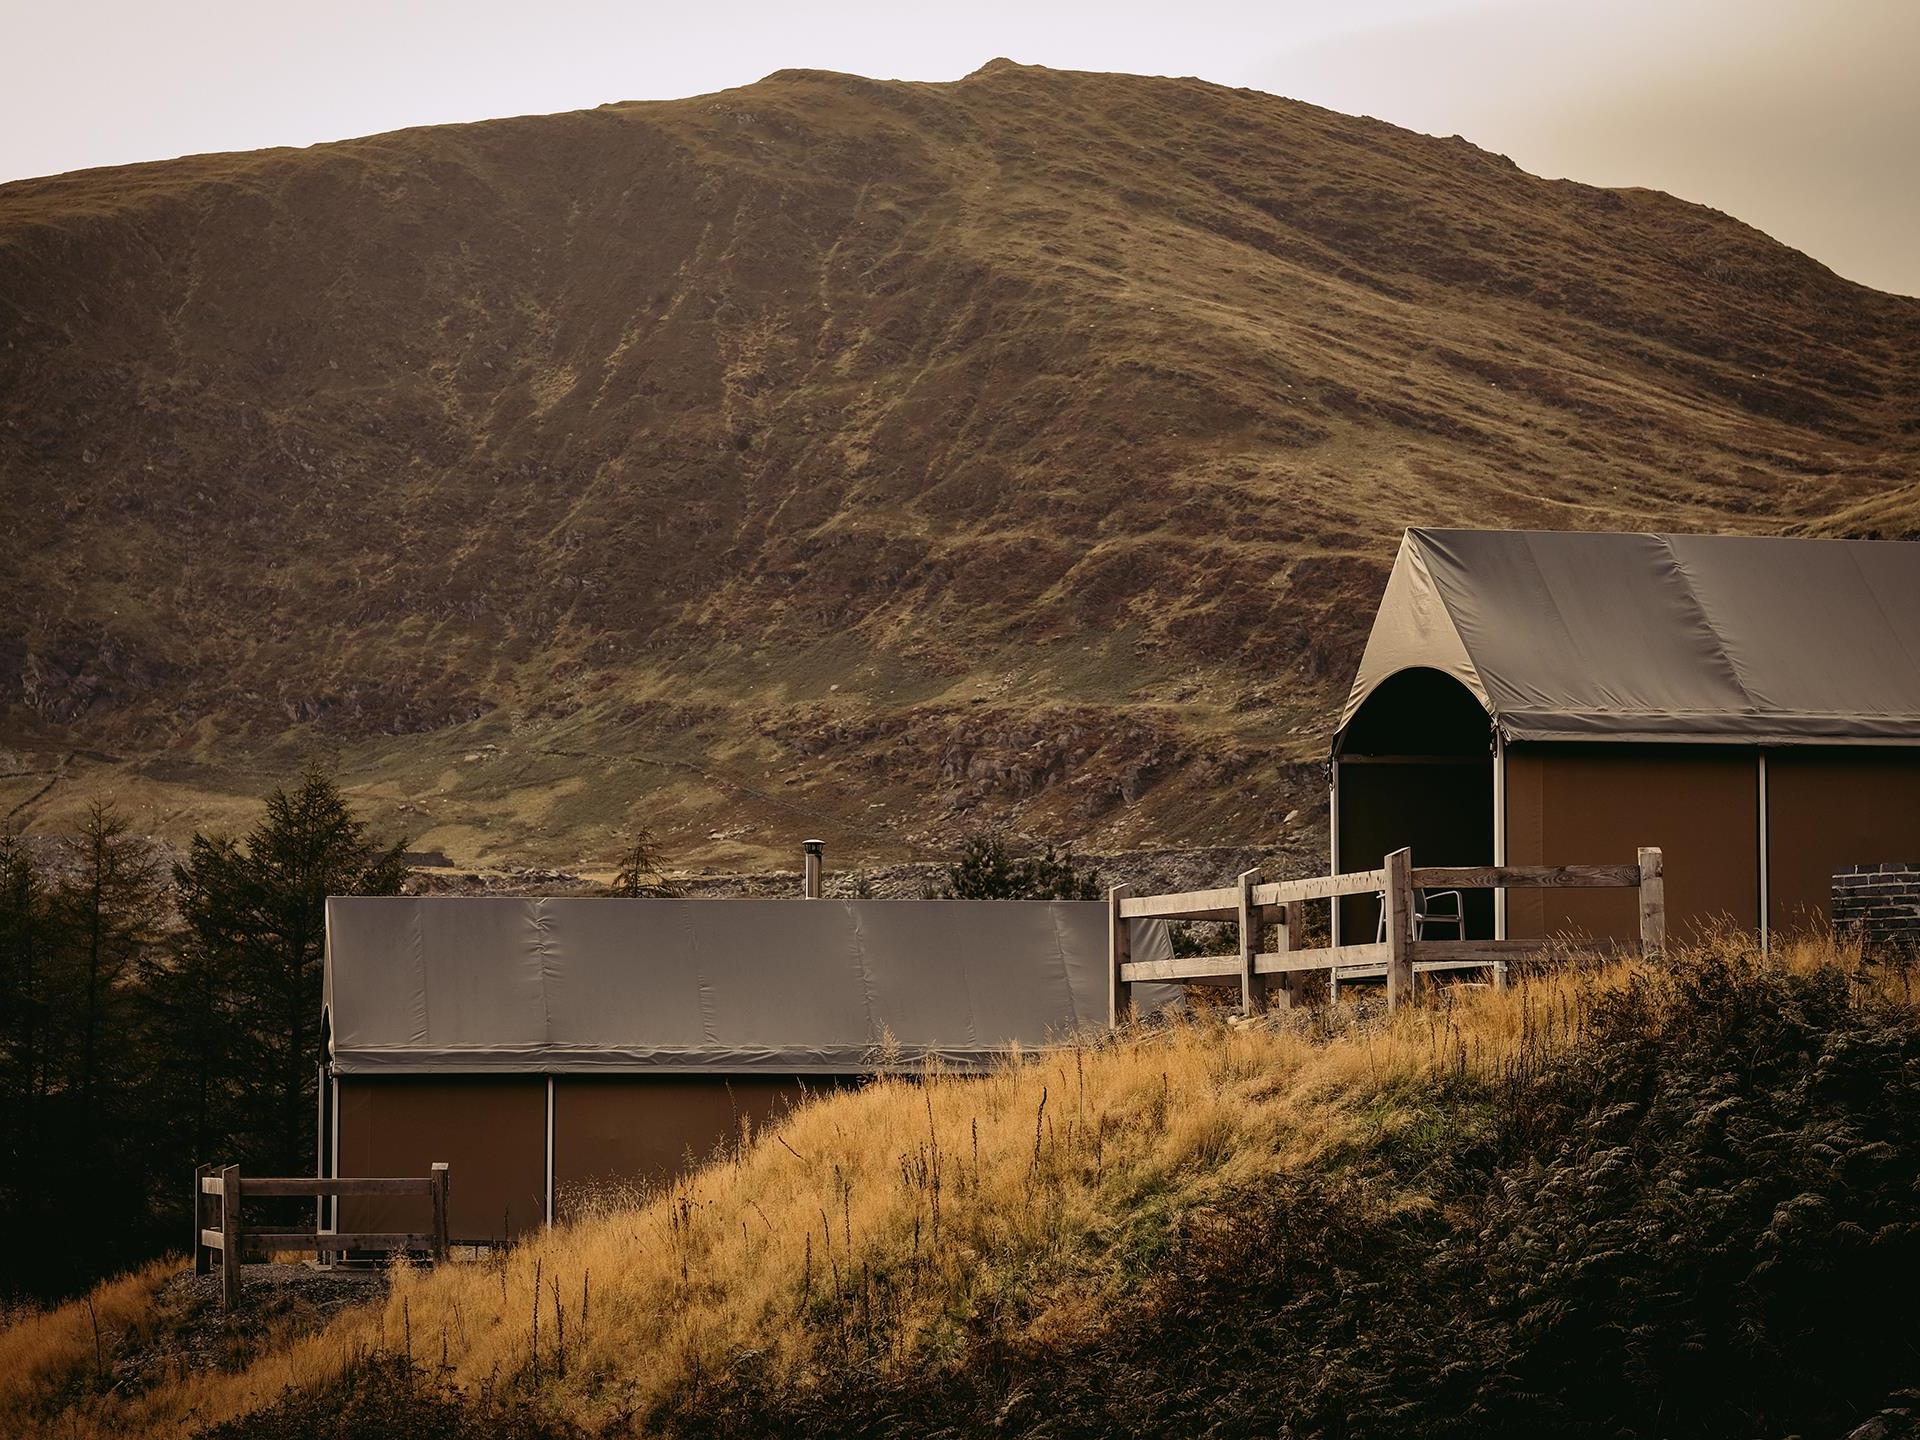 The perfect base to explore Snowdonia